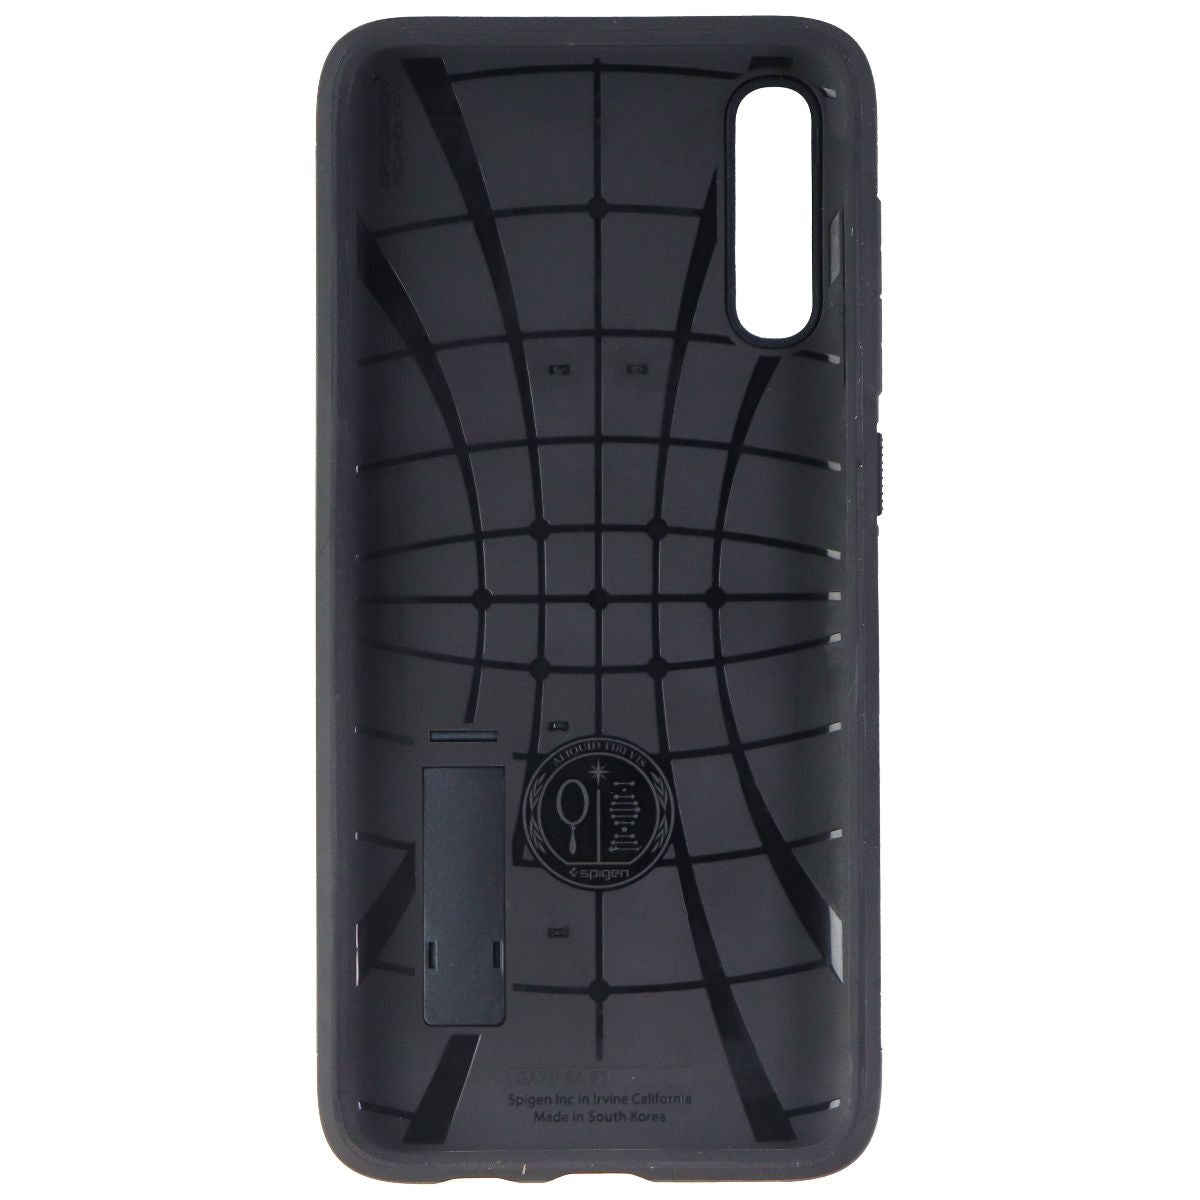 Spigen Slim Armor Series Case for Samsung Galaxy A70 - Metal Slate/Black Cell Phone - Cases, Covers & Skins Spigen    - Simple Cell Bulk Wholesale Pricing - USA Seller